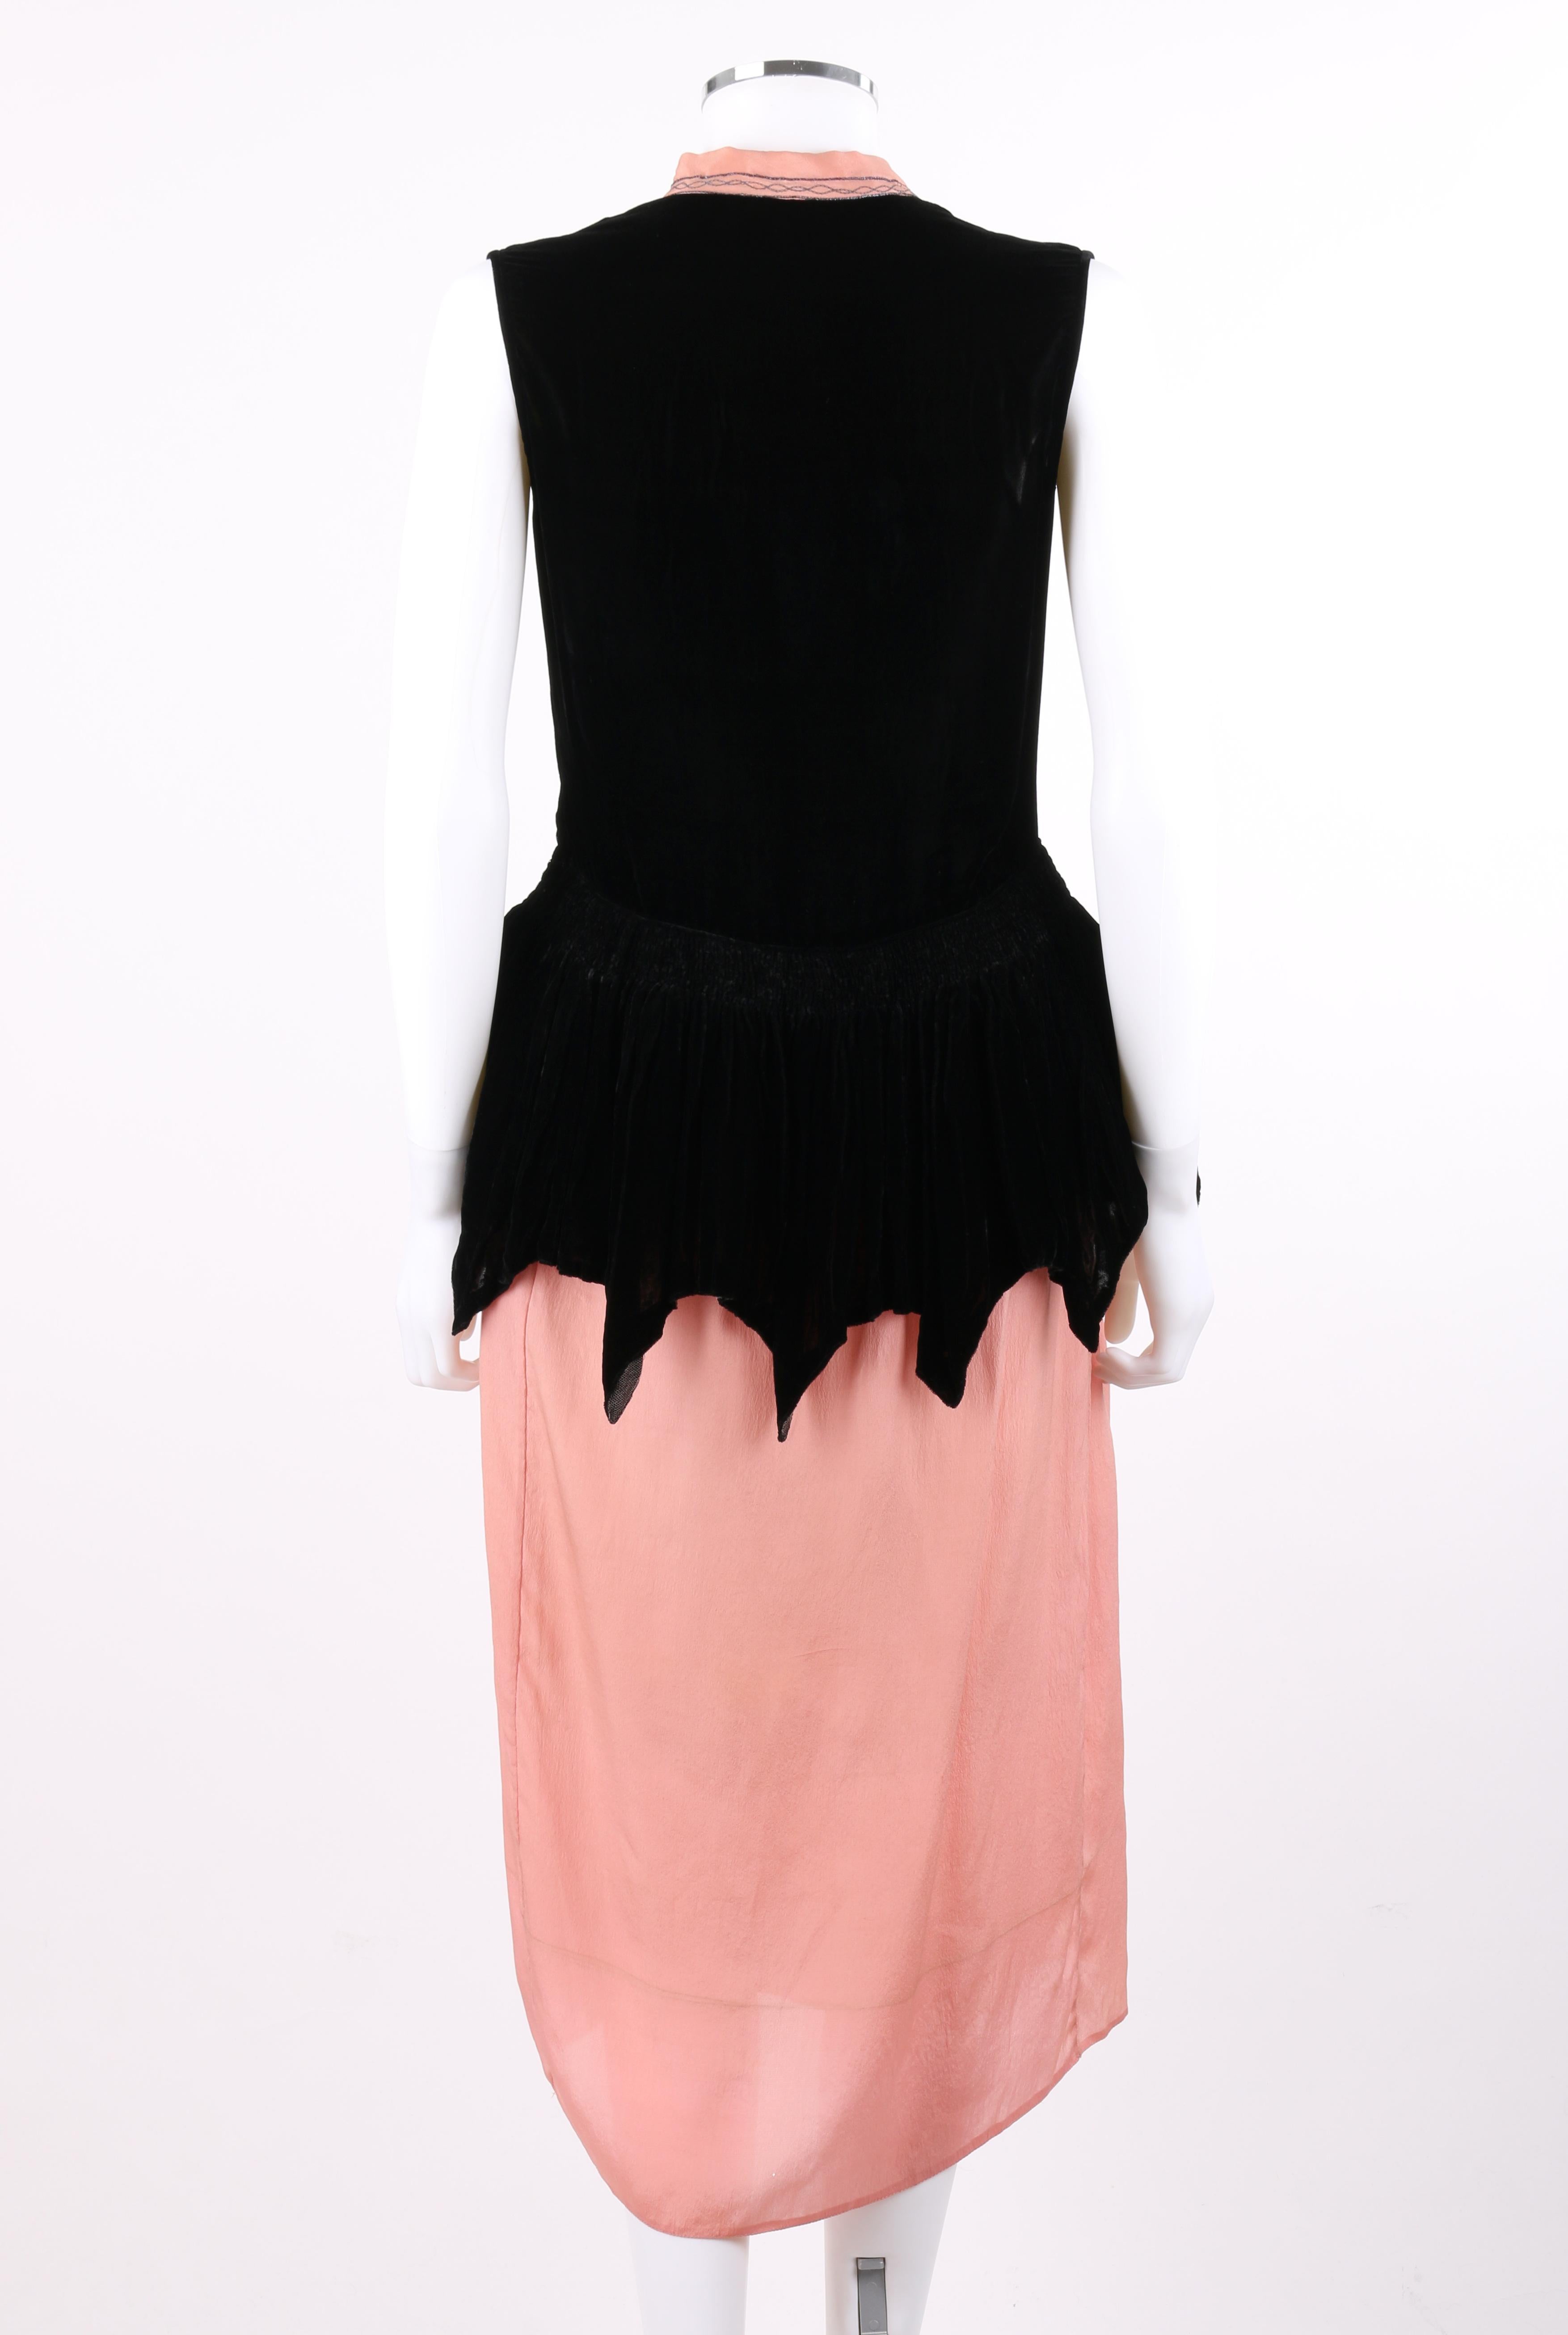 BARNETT c.1910's Rose Pink & Black Silk Velvet Sleeveless Peplum Evening Dress  In Good Condition For Sale In Thiensville, WI